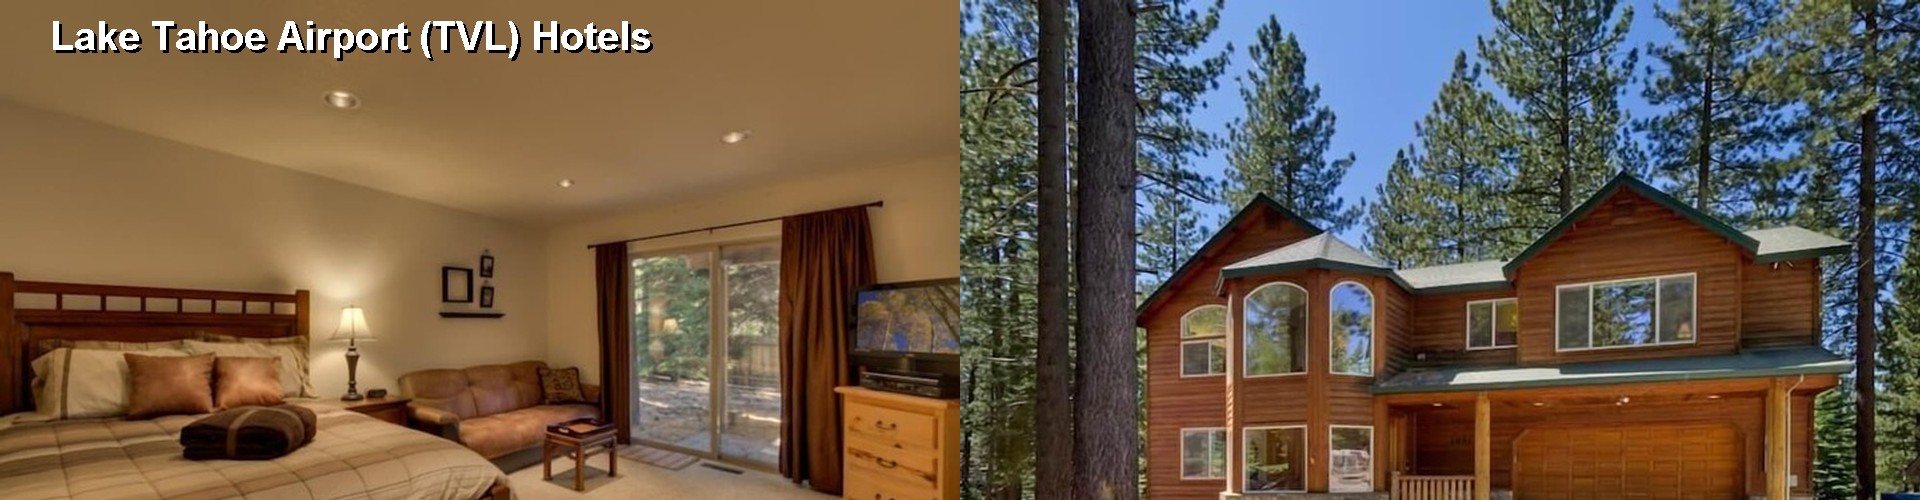 3 Best Hotels near Lake Tahoe Airport (TVL)